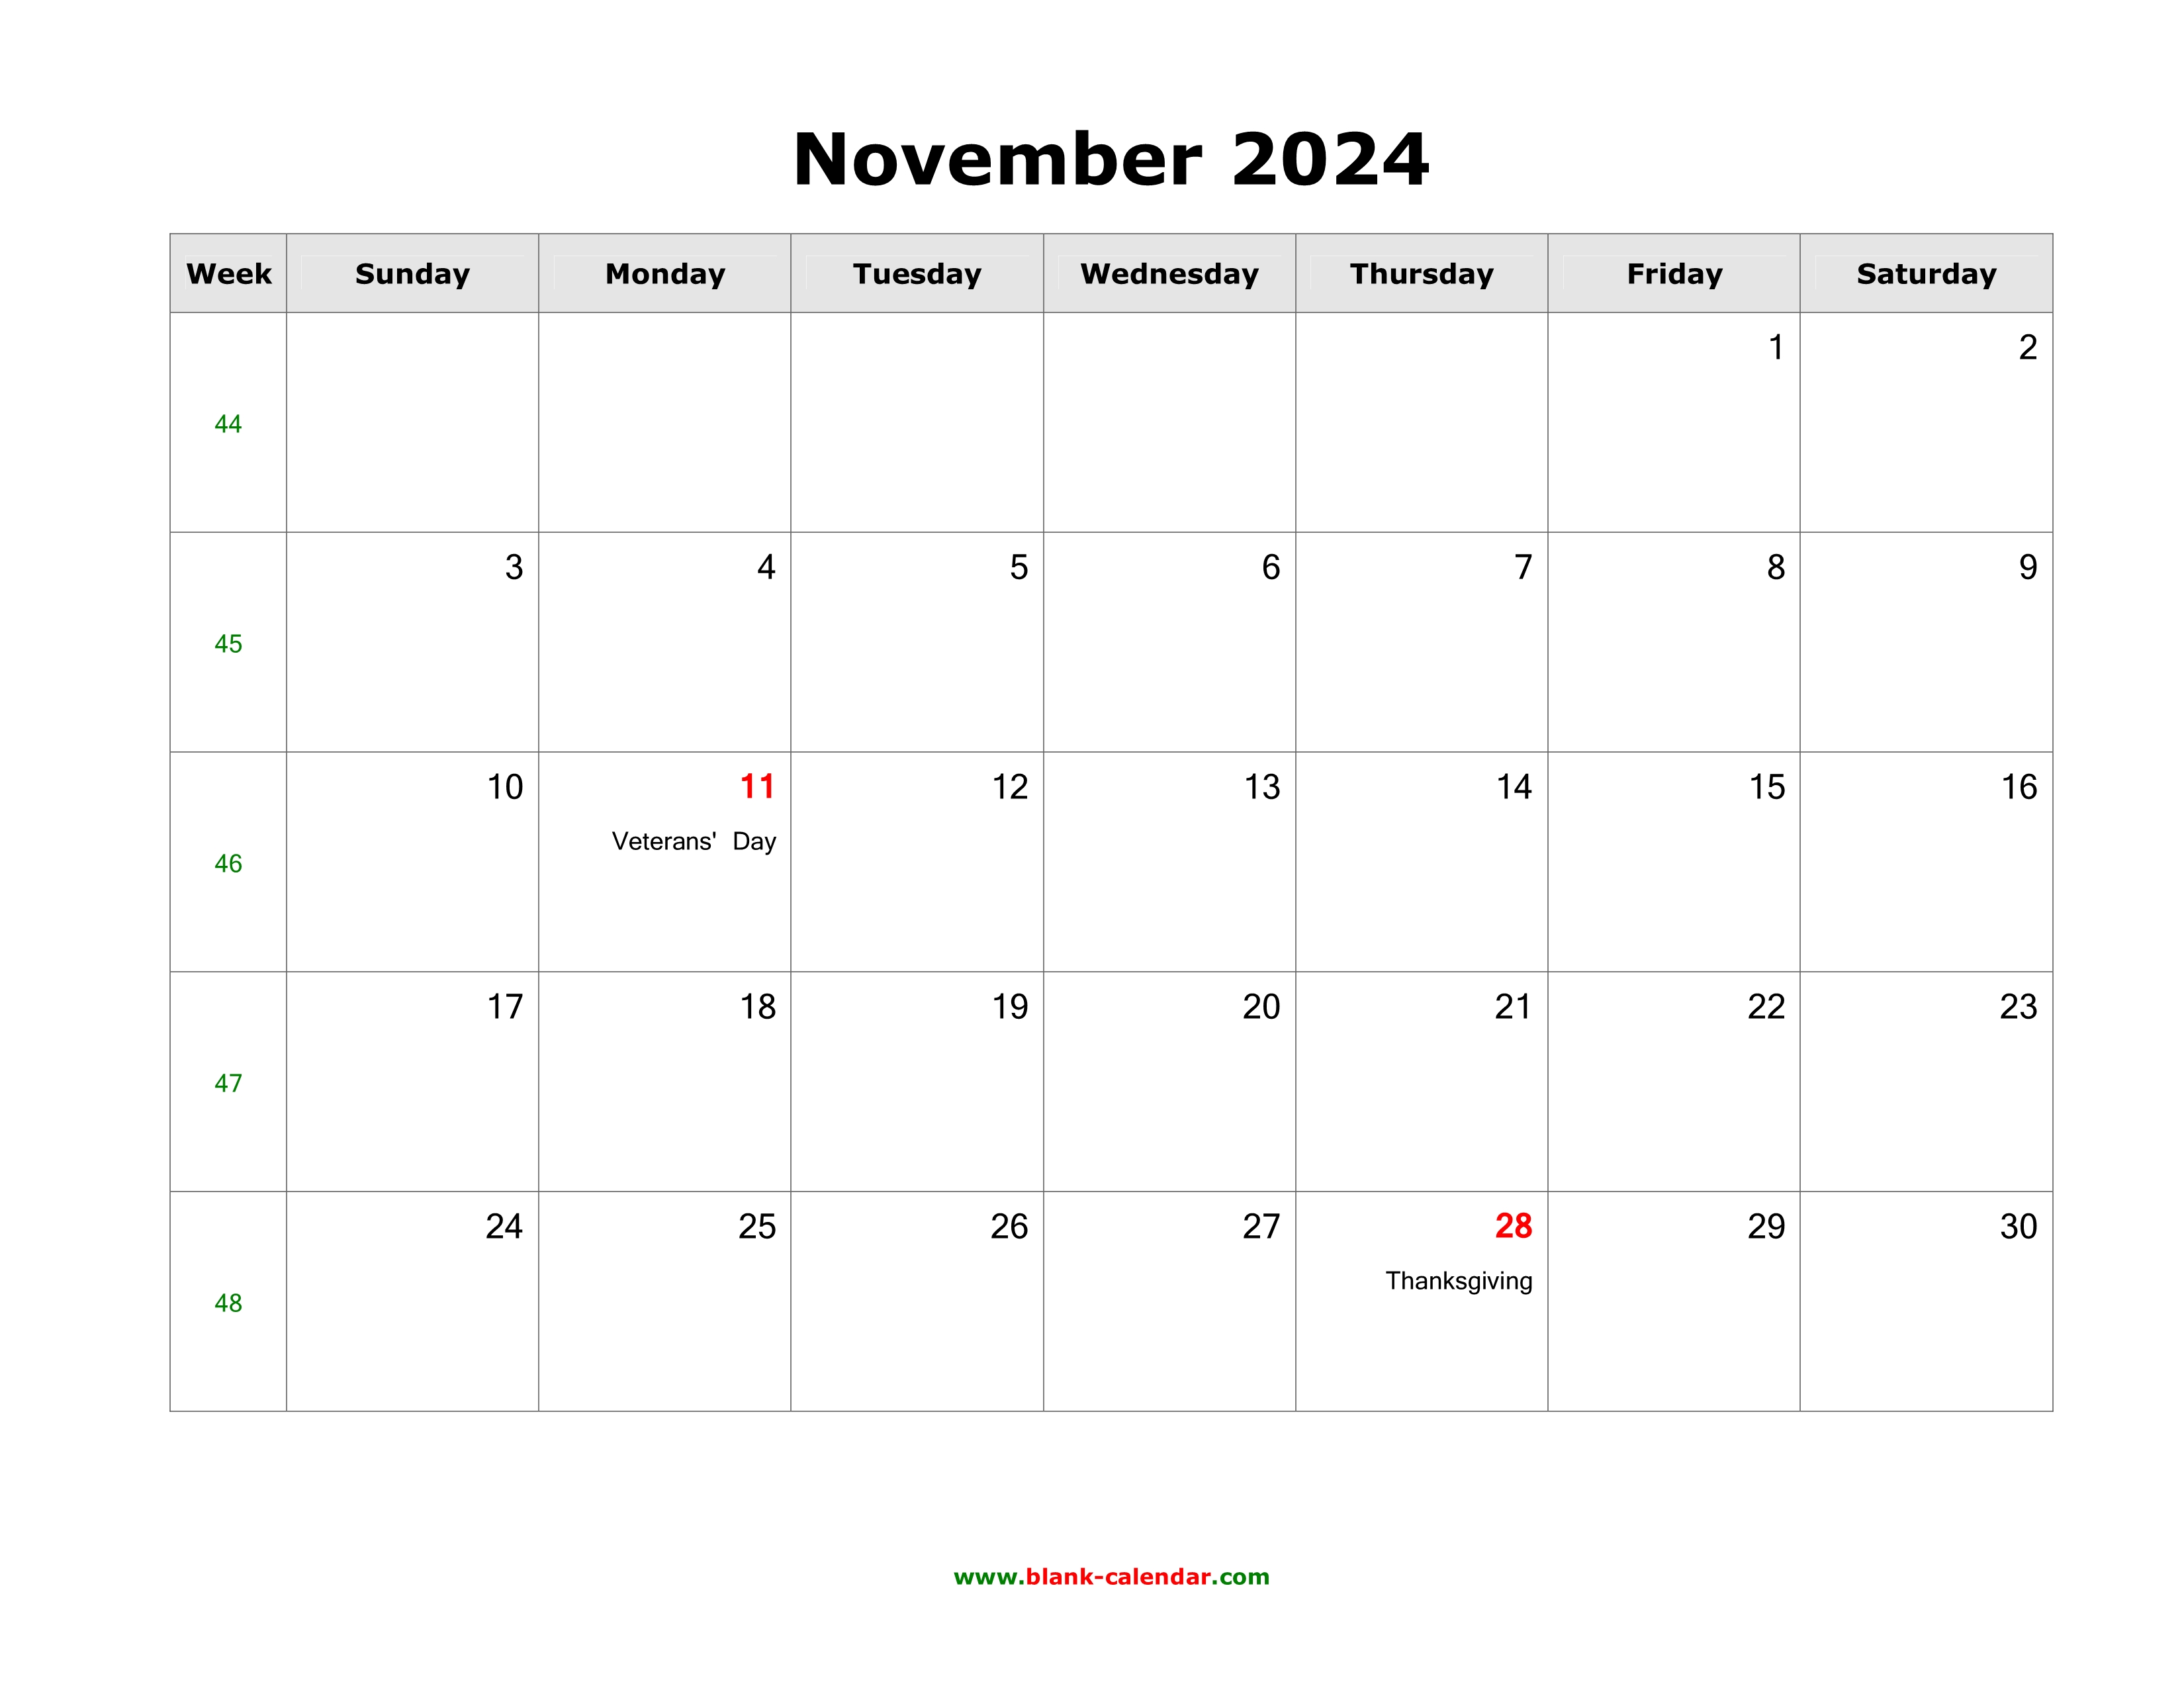 Download November 2024 Blank Calendar with US Holidays (horizontal)